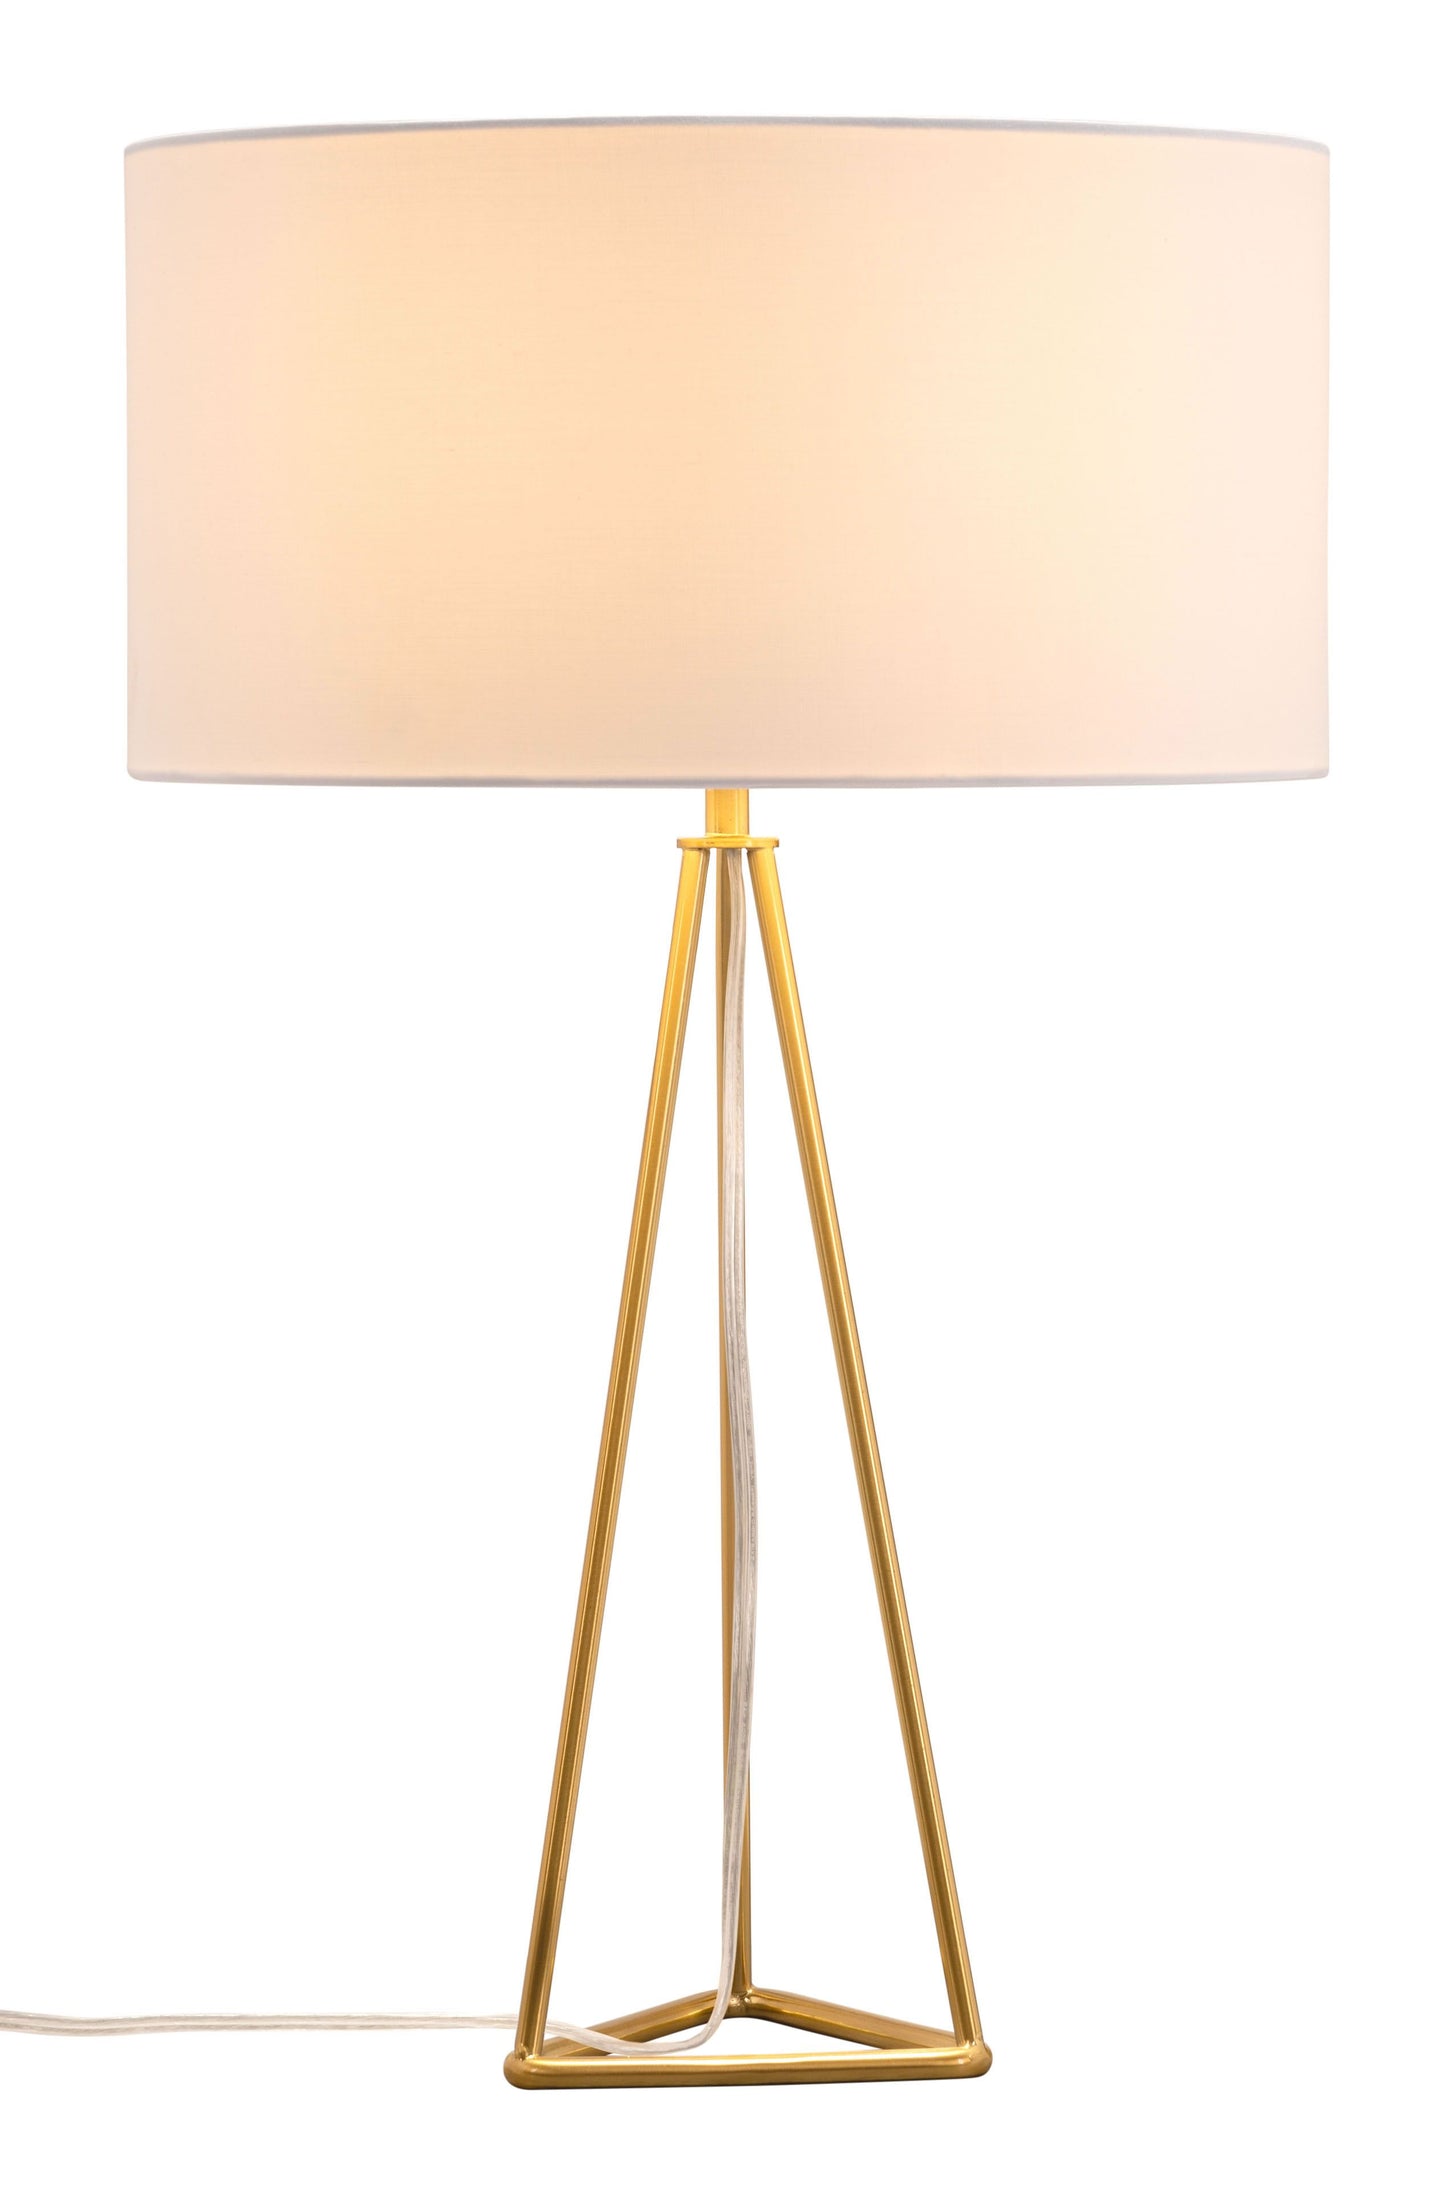 Sascha Table Lamp White & Gold